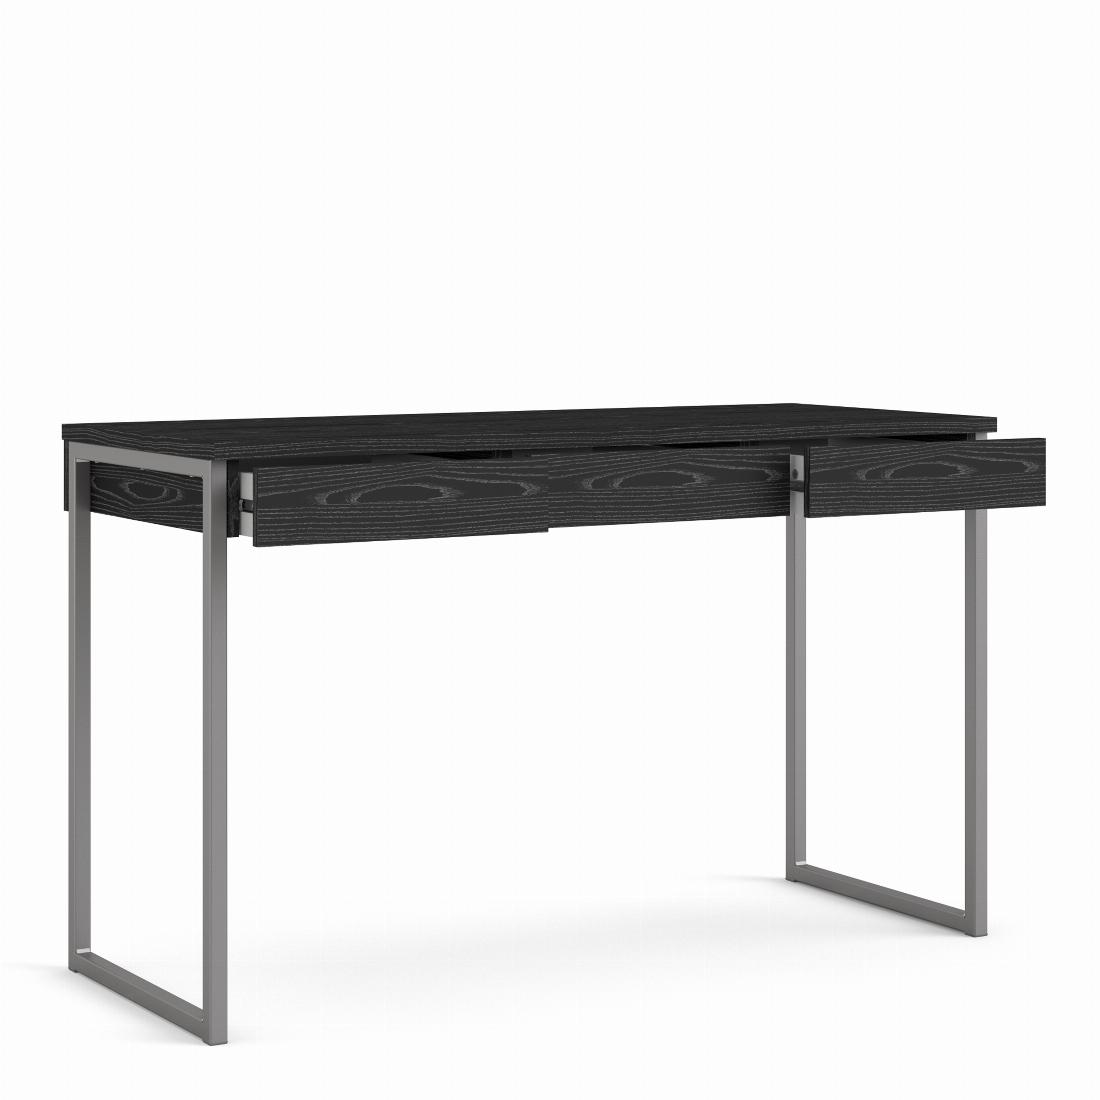 Function Plus Desk 3 Drawers in Black